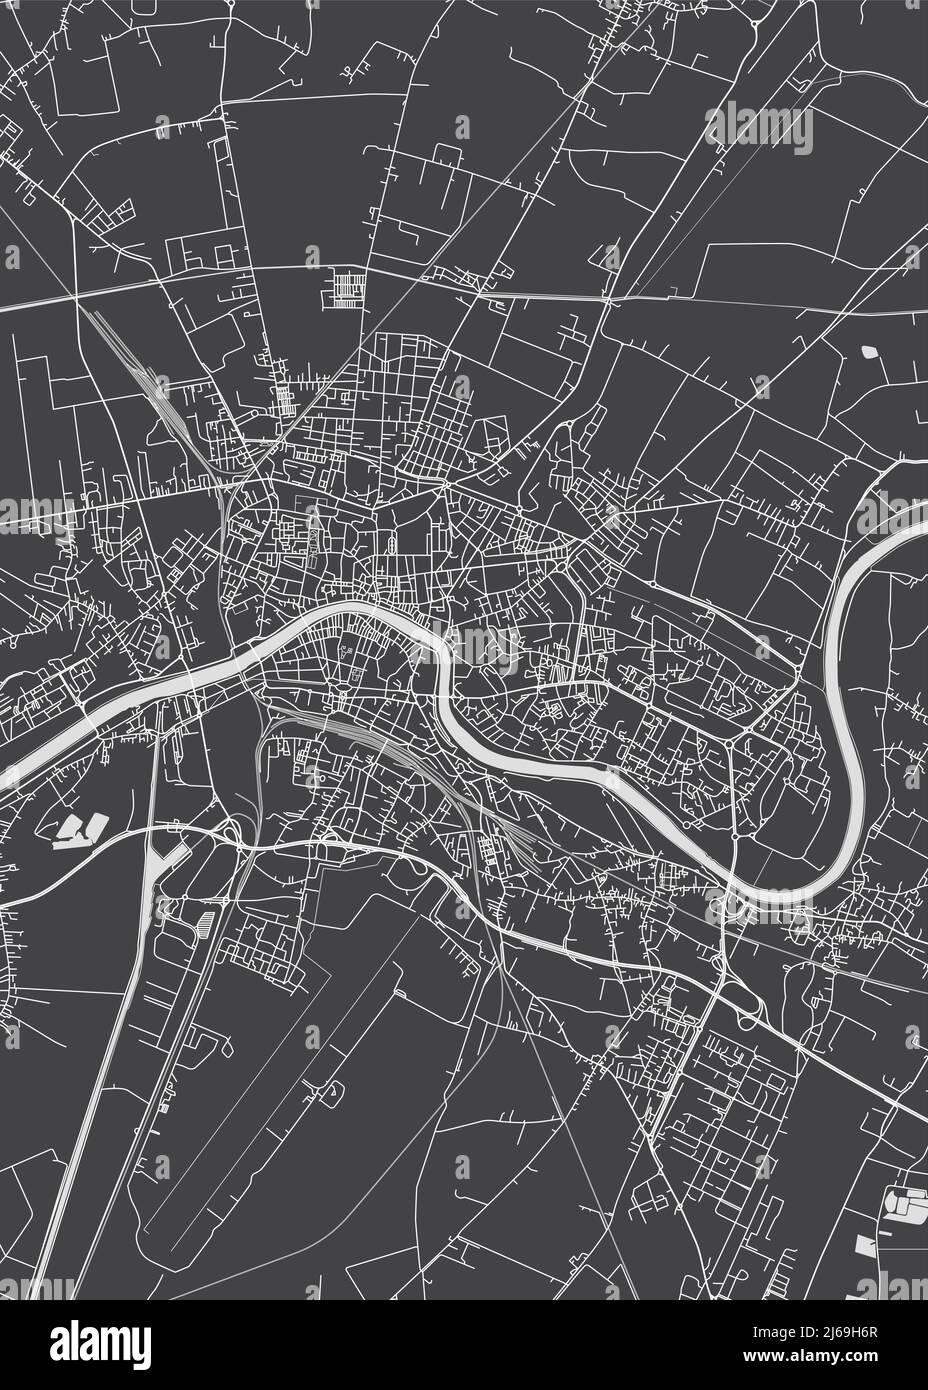 Stadtplan Pisa, monochromer Detailplan, Vektorgrafik Schwarzweiß-Stadtplan Stock Vektor